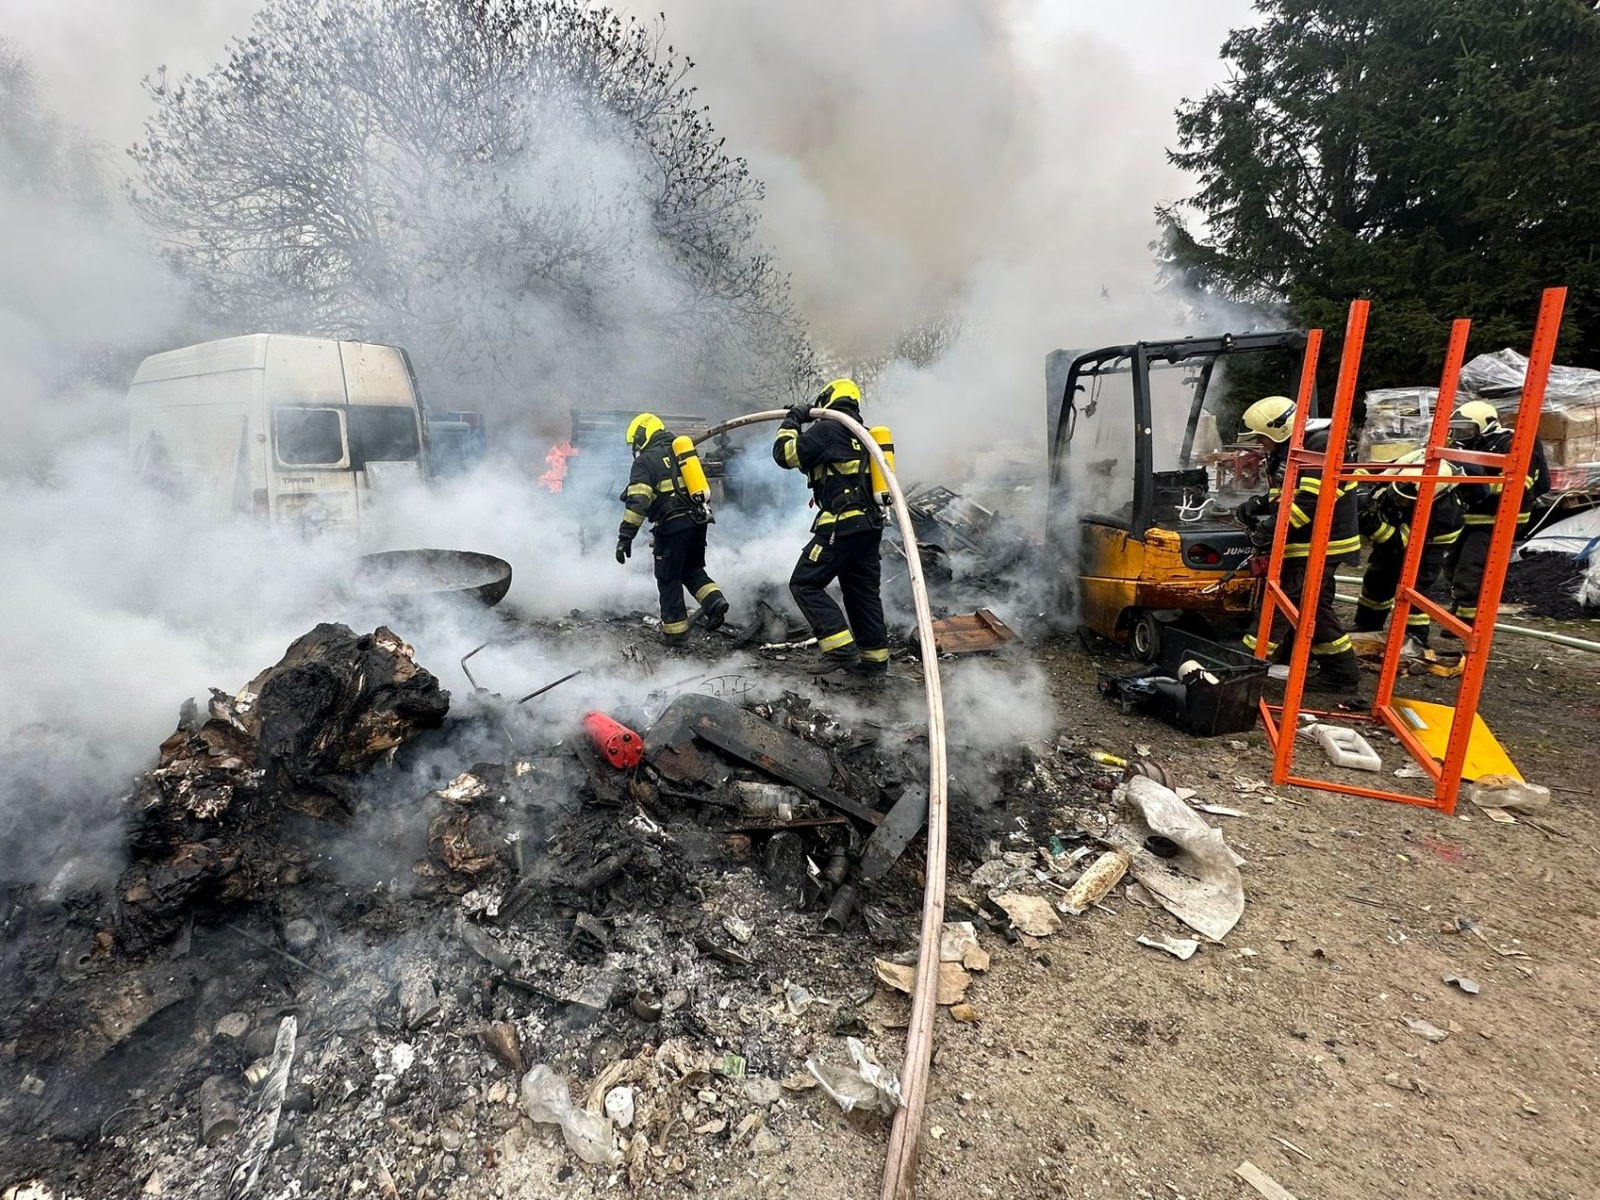 310324-Požár vysokozdvižného vozíku rozšířený na vraky aut a různý odpad v Hlubočince v okrese Praha-východ.jpeg